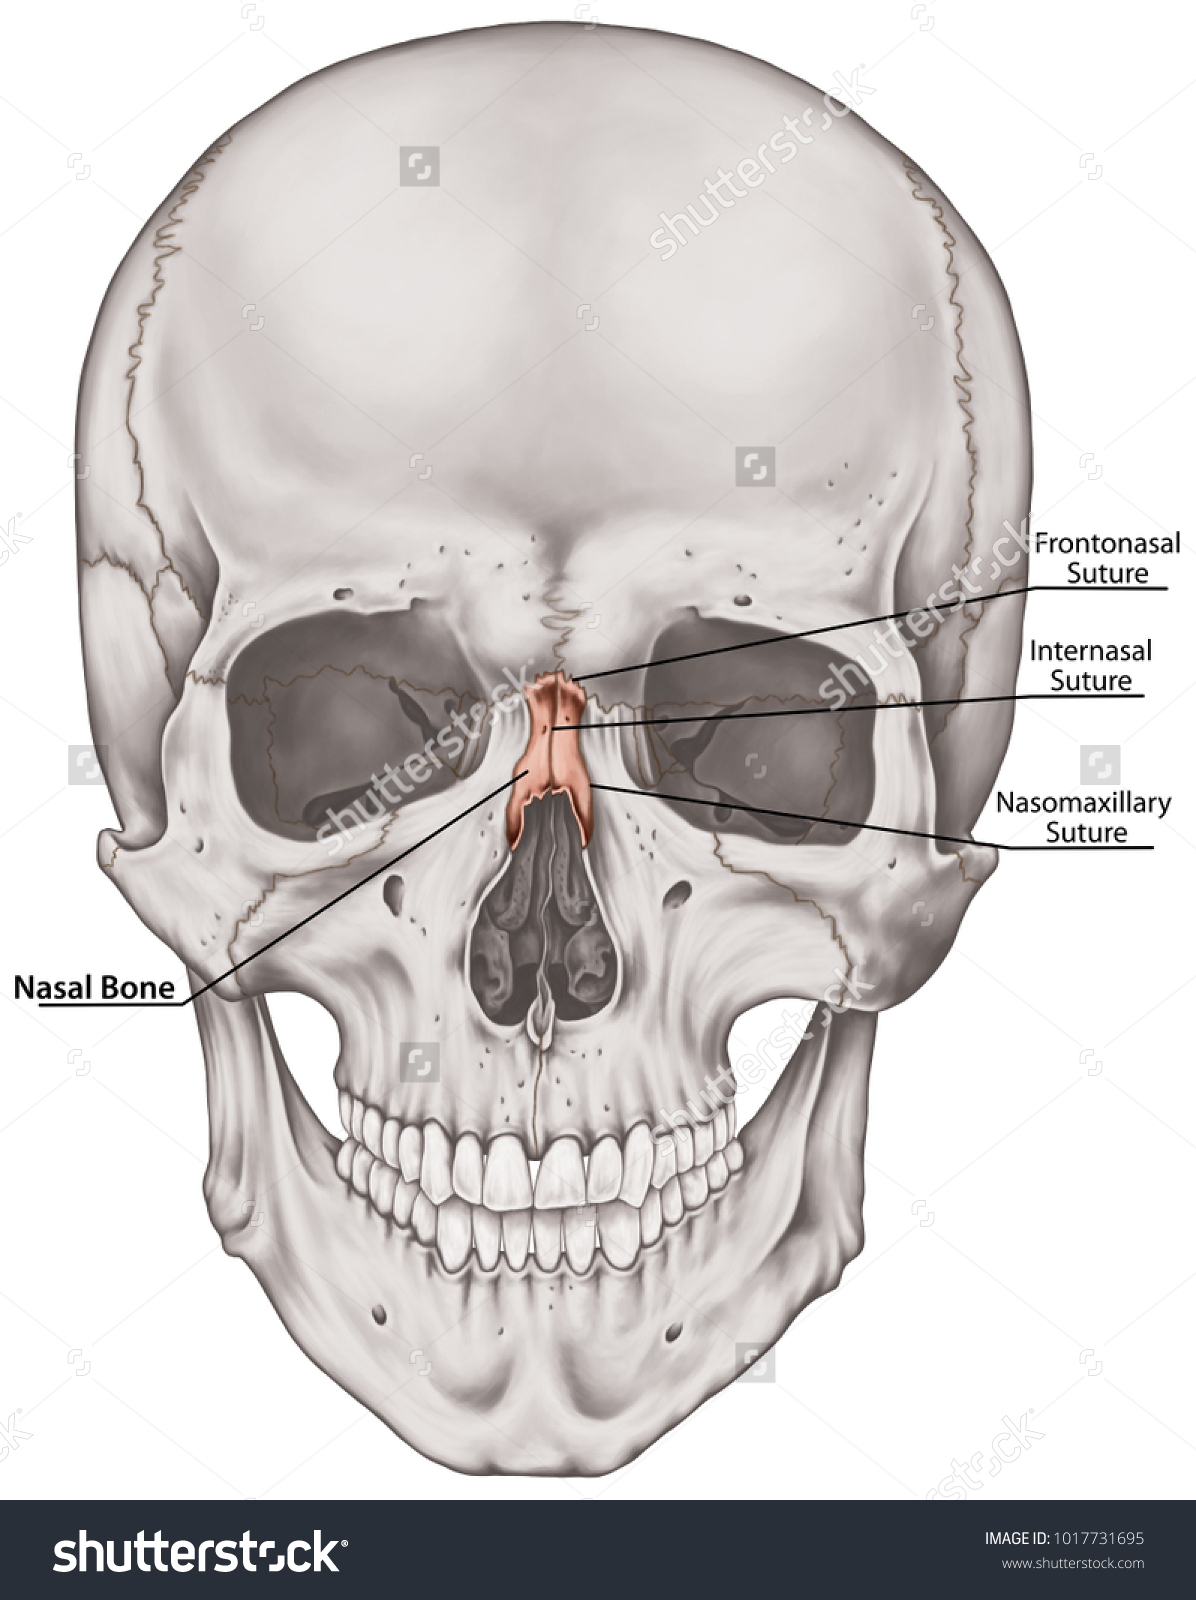 Nasal Bone Cranium Bones Head Skull Stock Illustration 1017731695